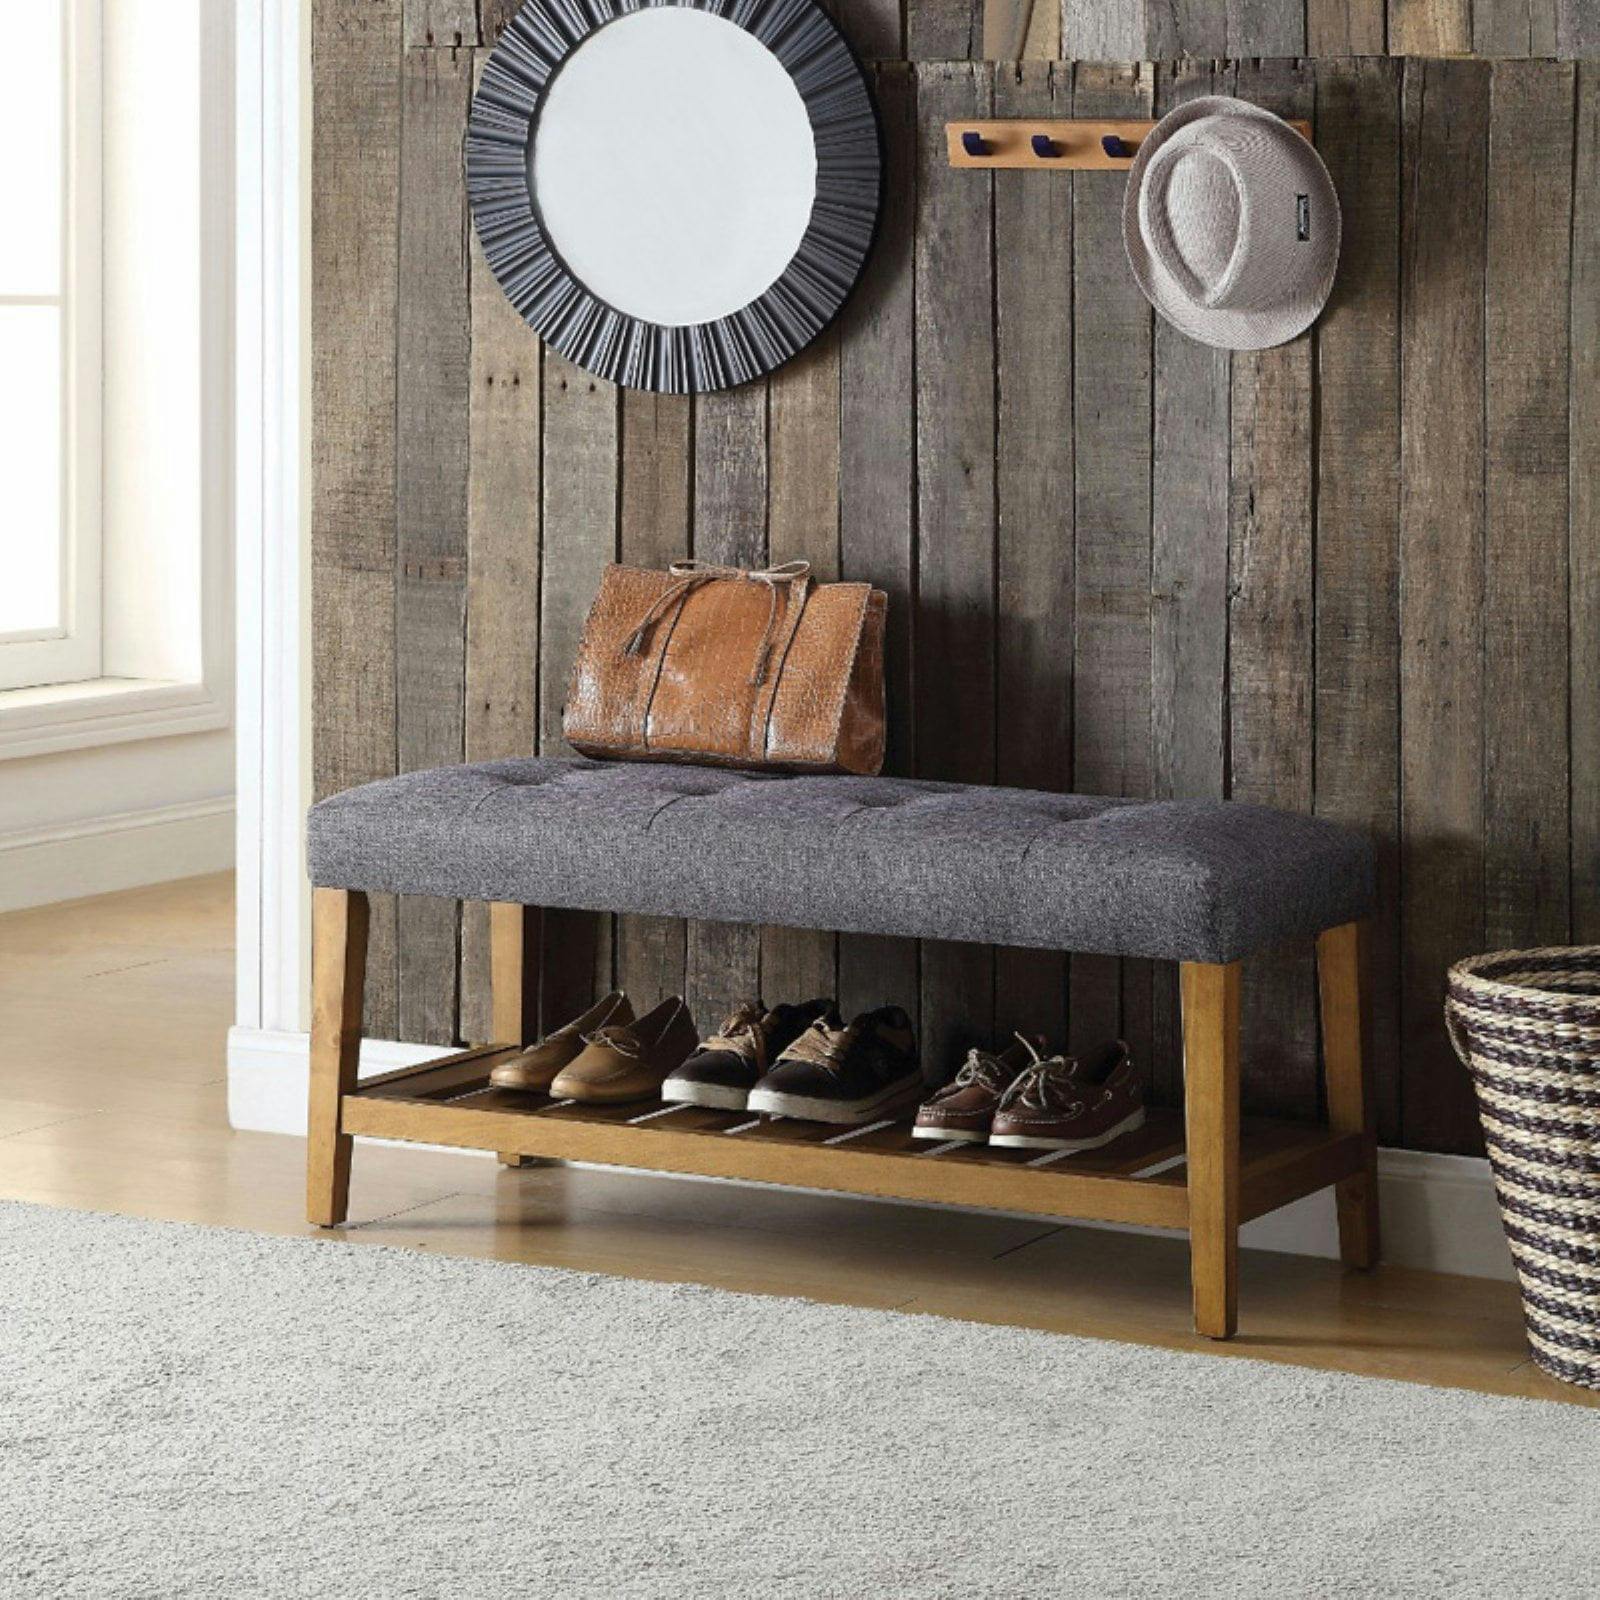 Craftsman Era Inspired Gray & Oak Wooden Bench with Storage Shelf